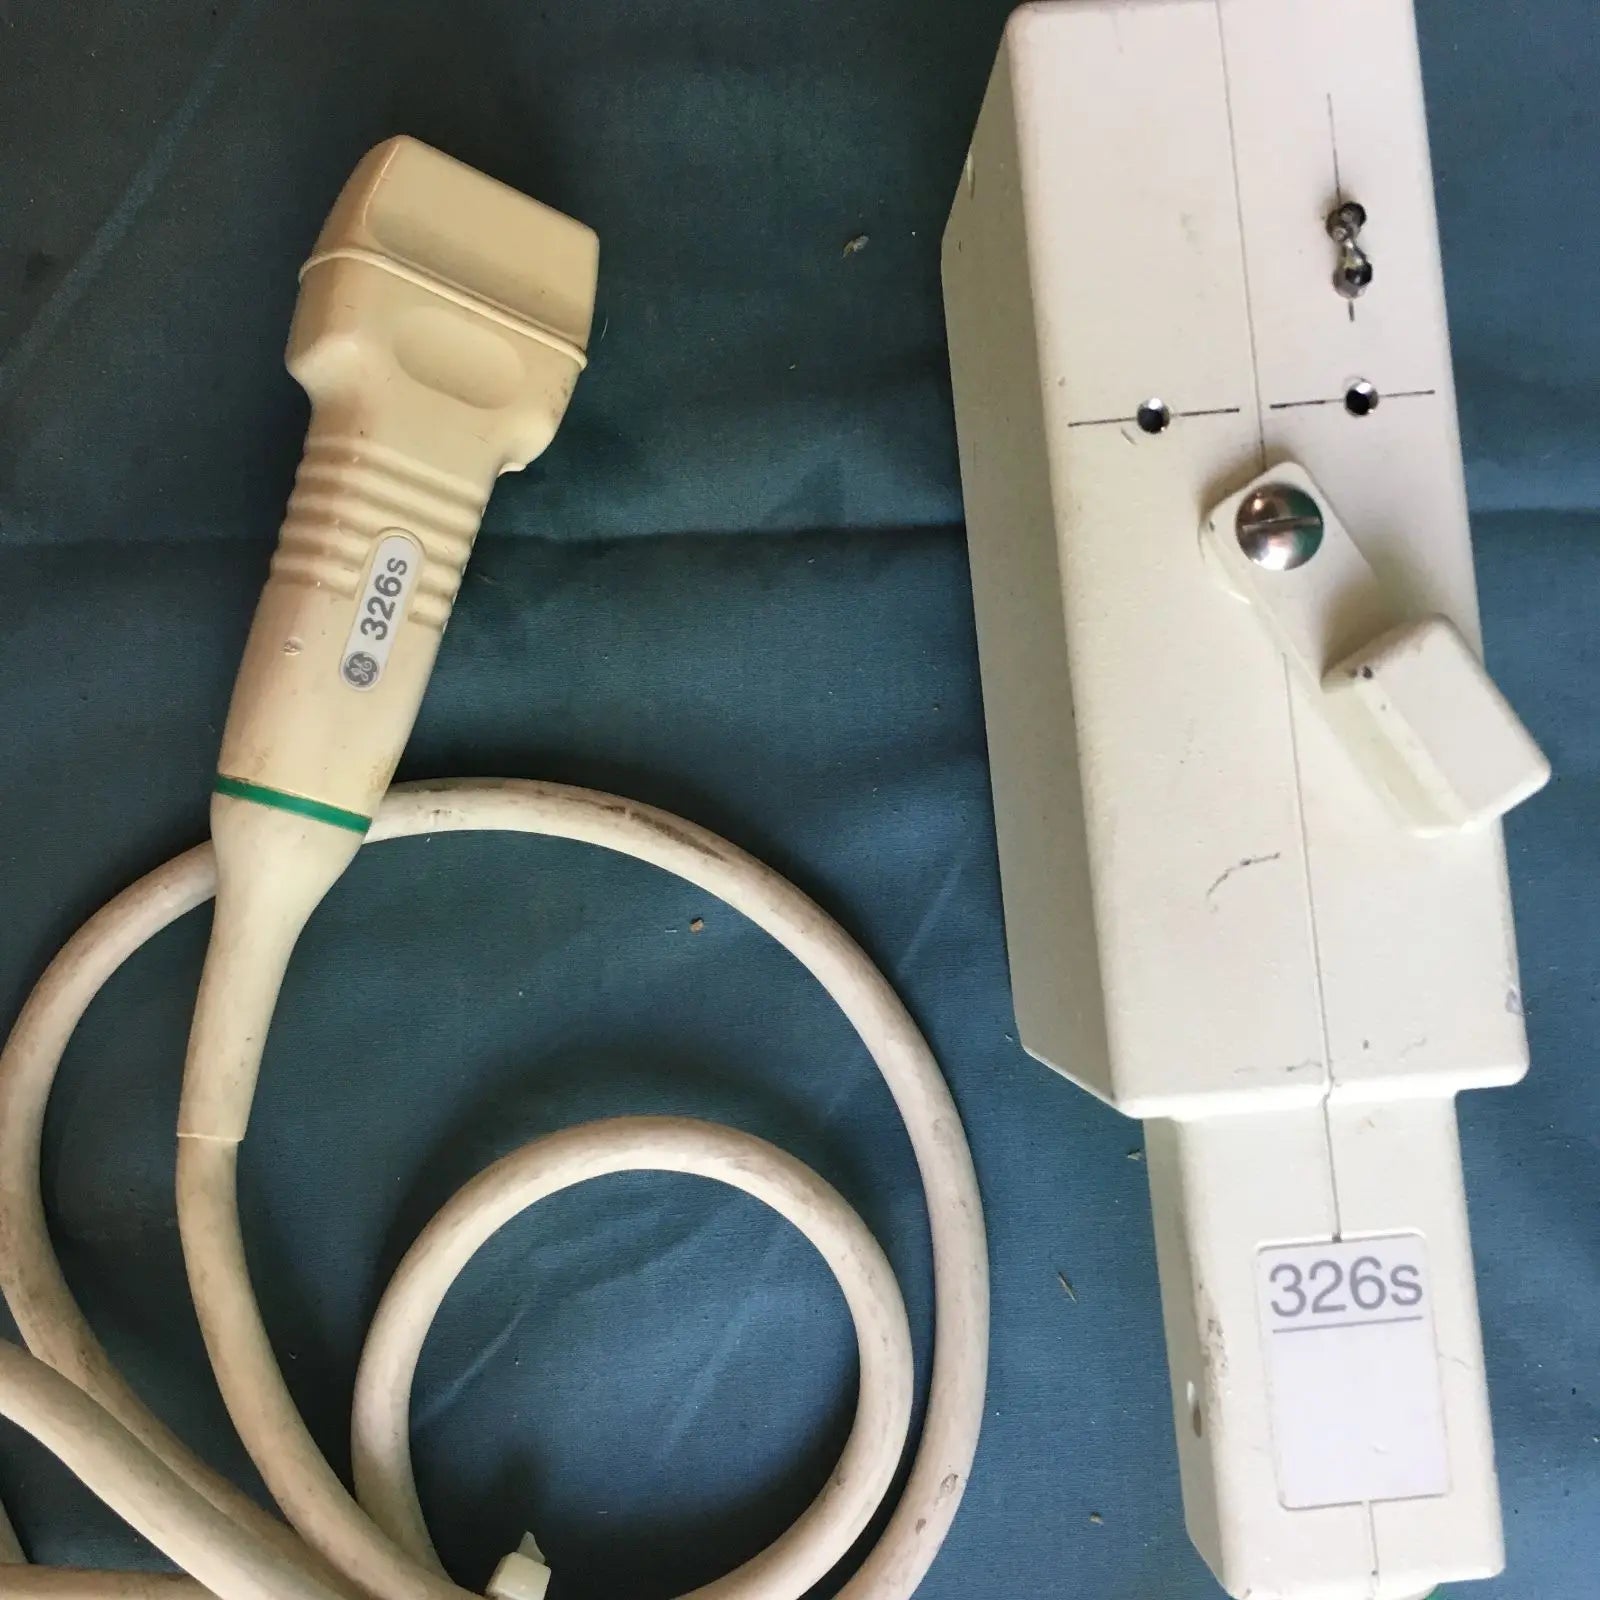 GE Medical Systems 326s Ultrasound Transducer Probe Model U39329